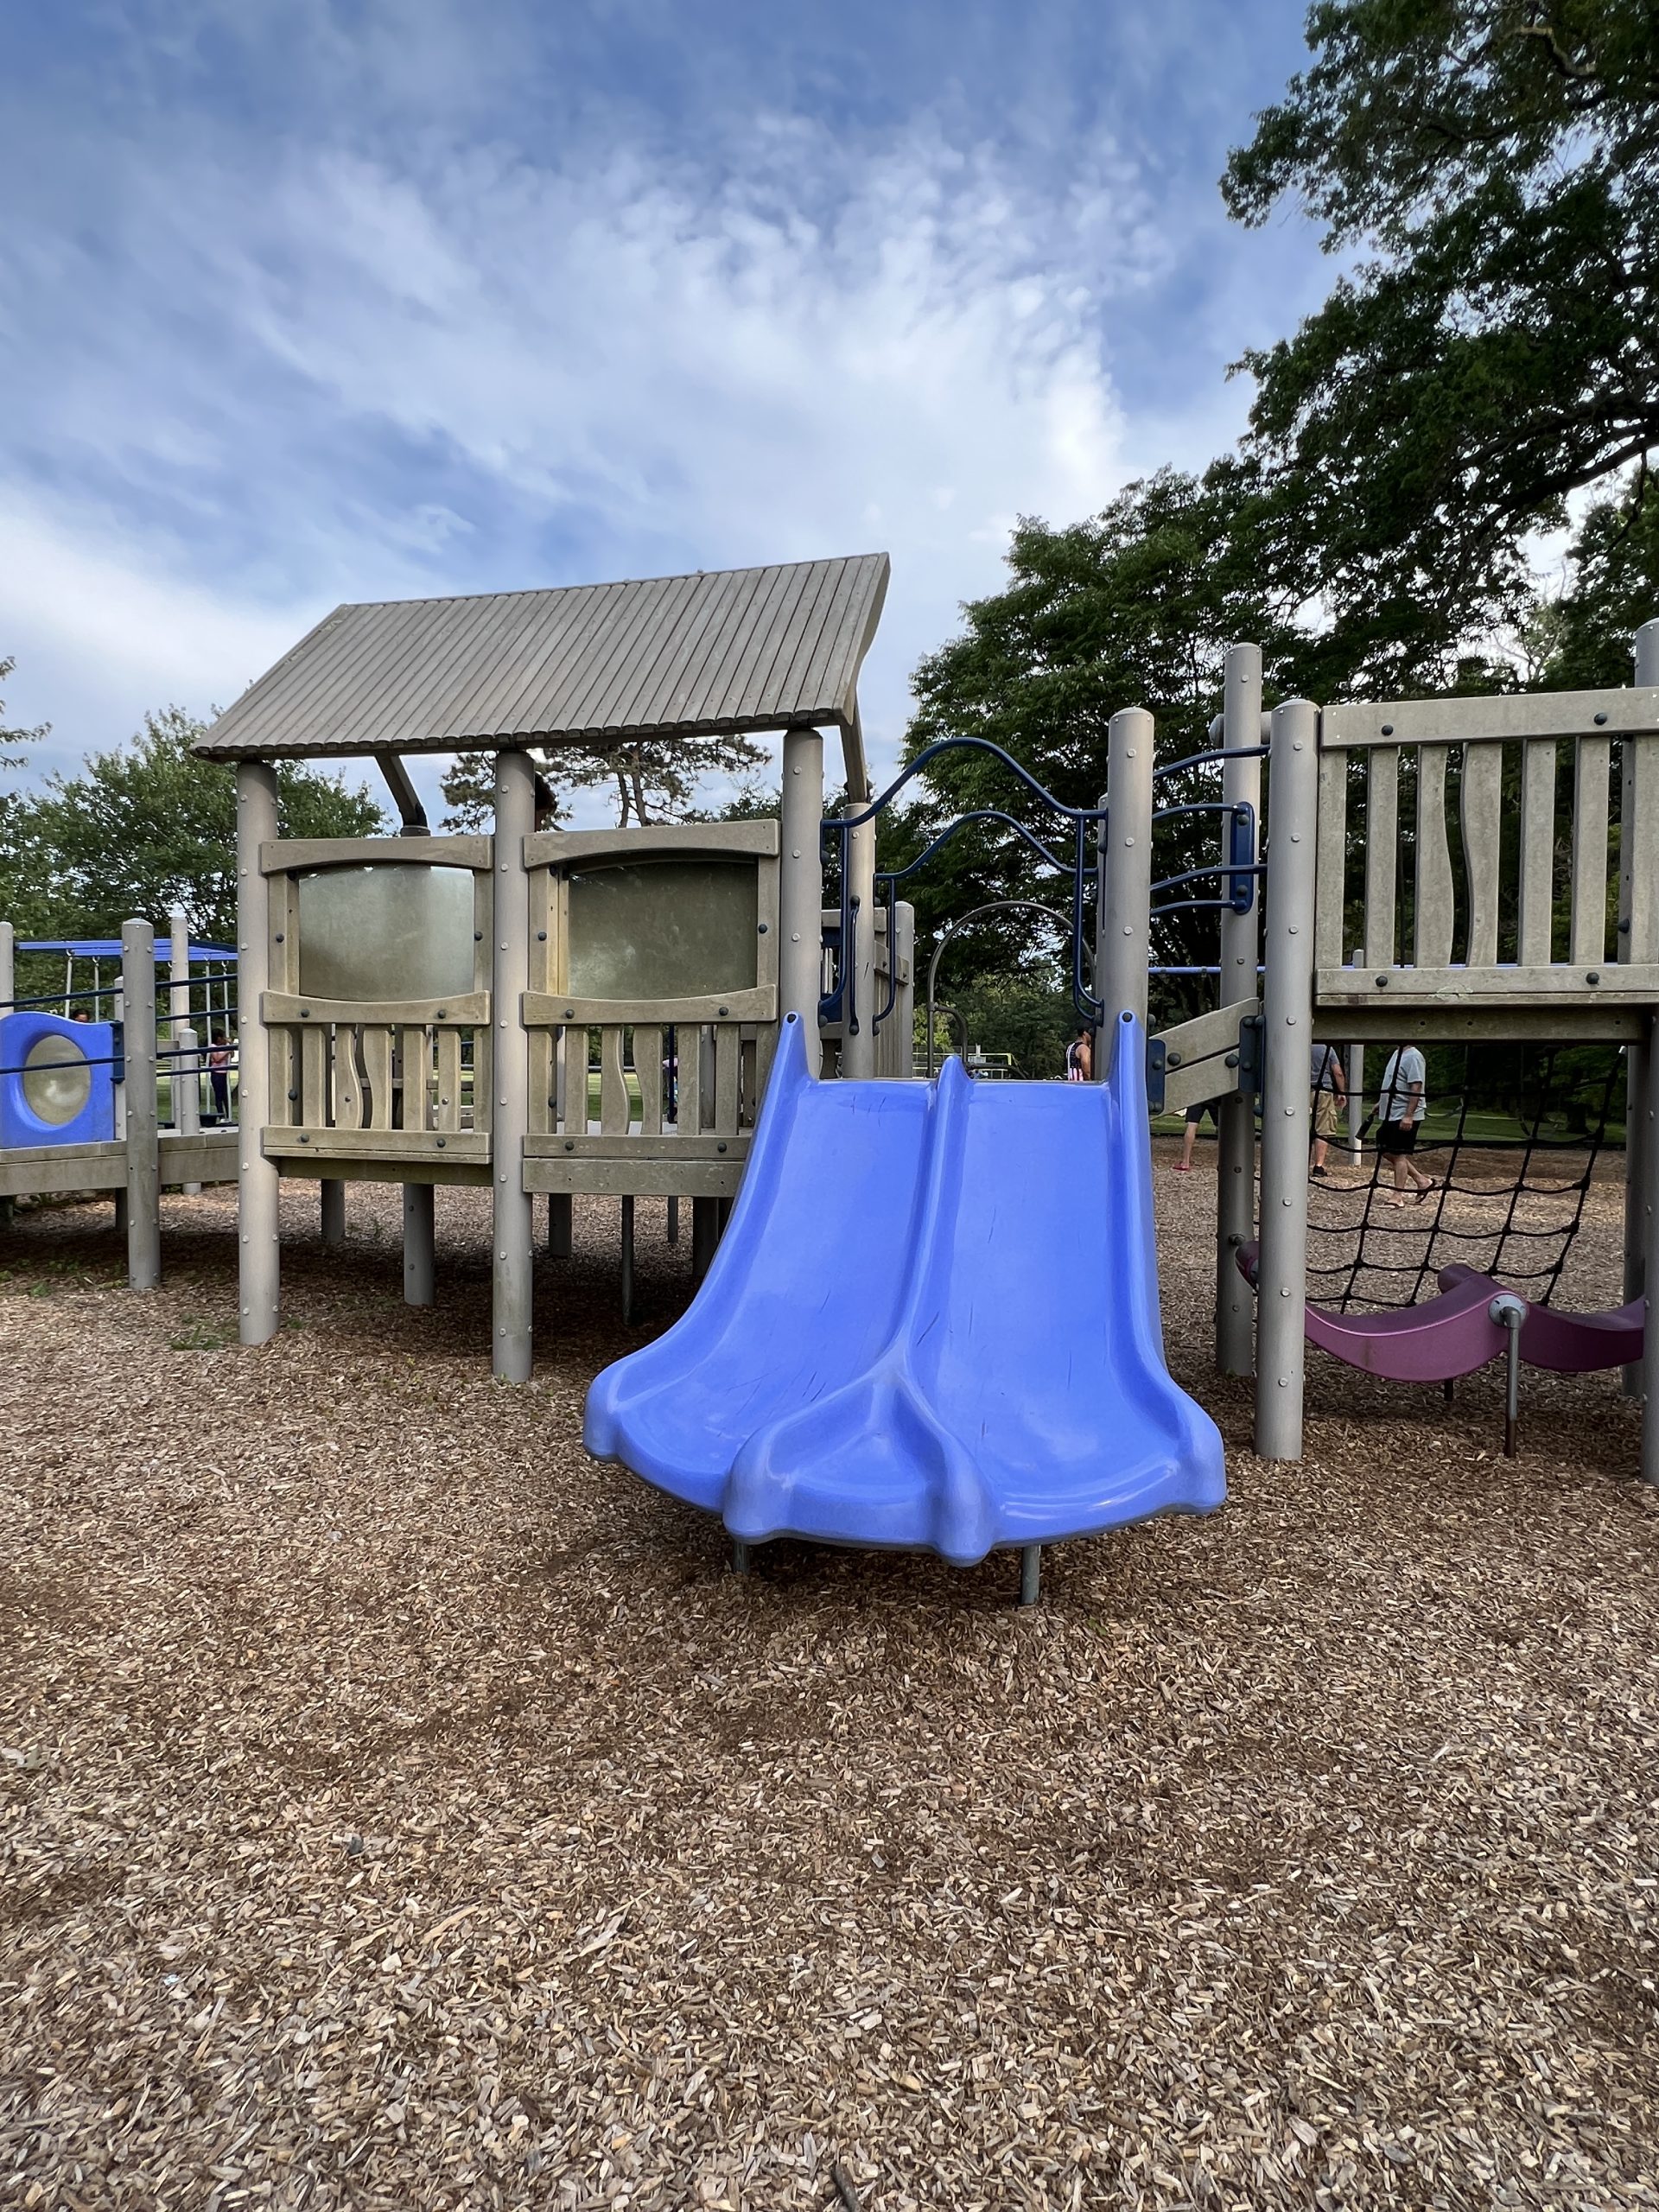 North Branch Park Playground in Bridgewater NJ - SLIDES - Short side by side slides 2 paths